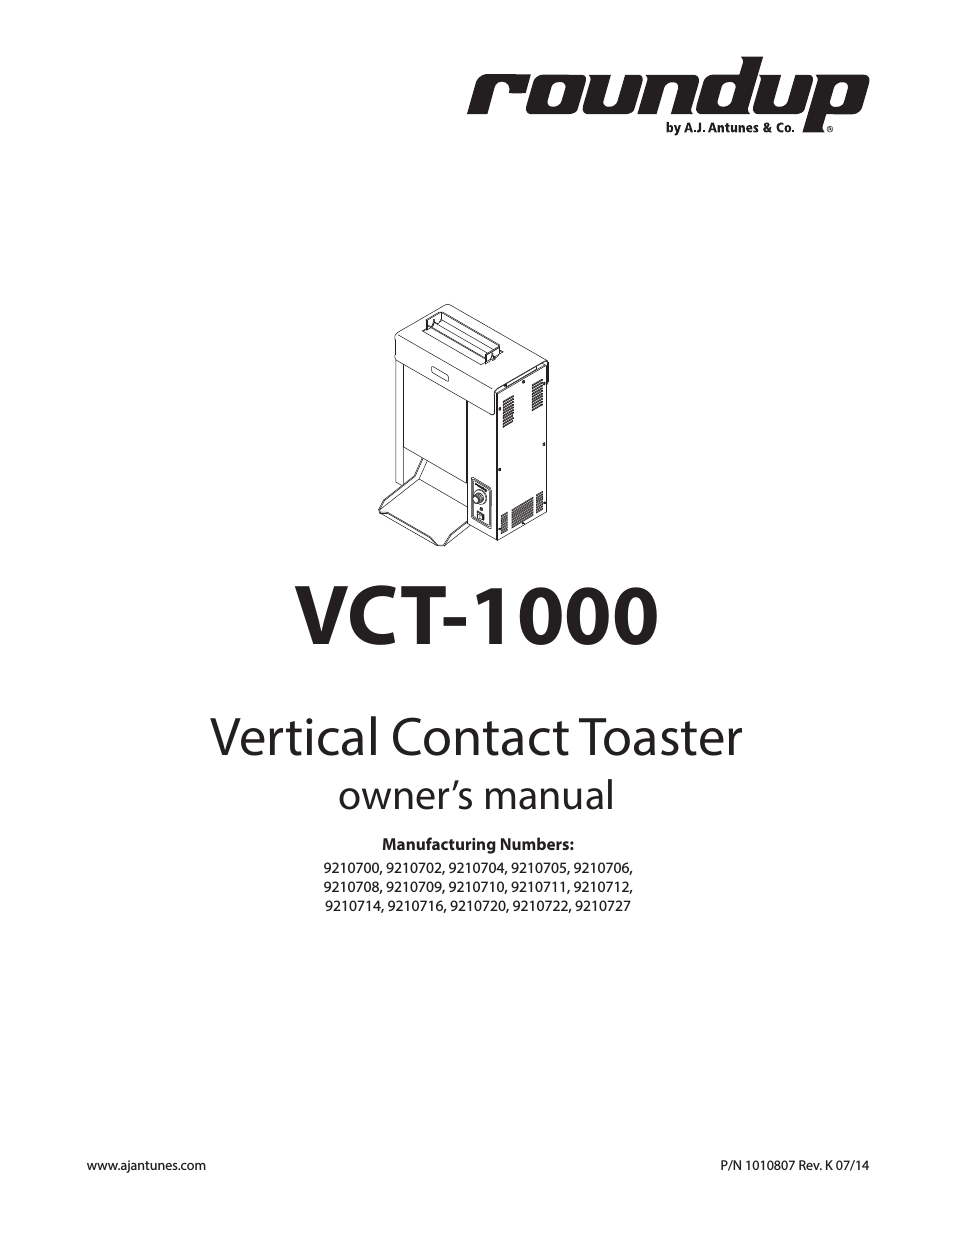 VCT-1000 9210712